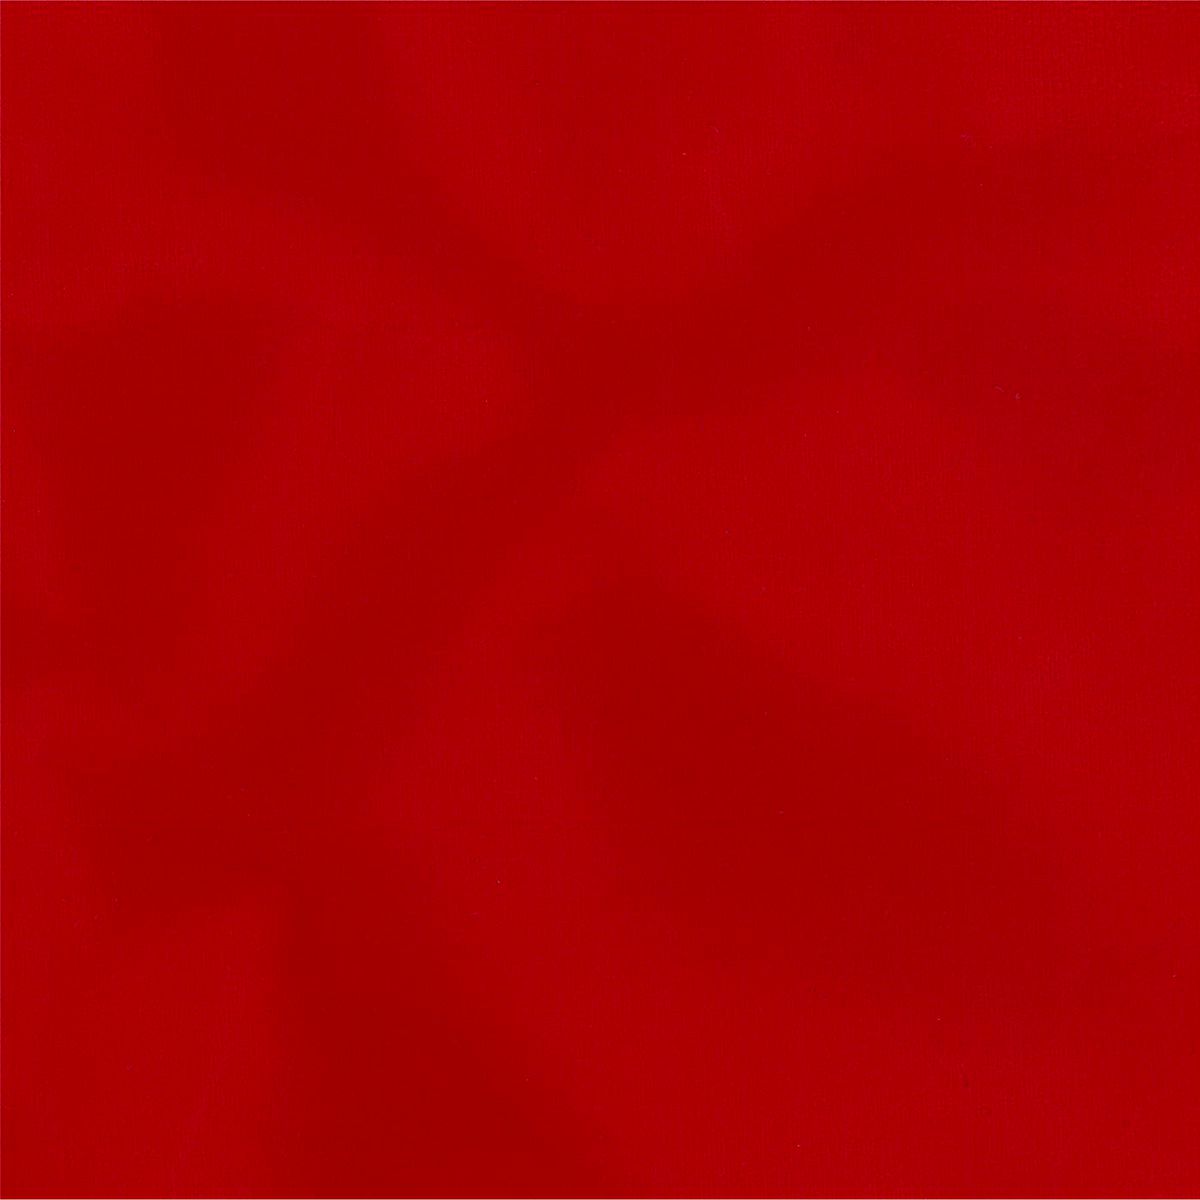 FashionFlex Puff HTV Burgundy 12x20 (Slightly darker shade of red)